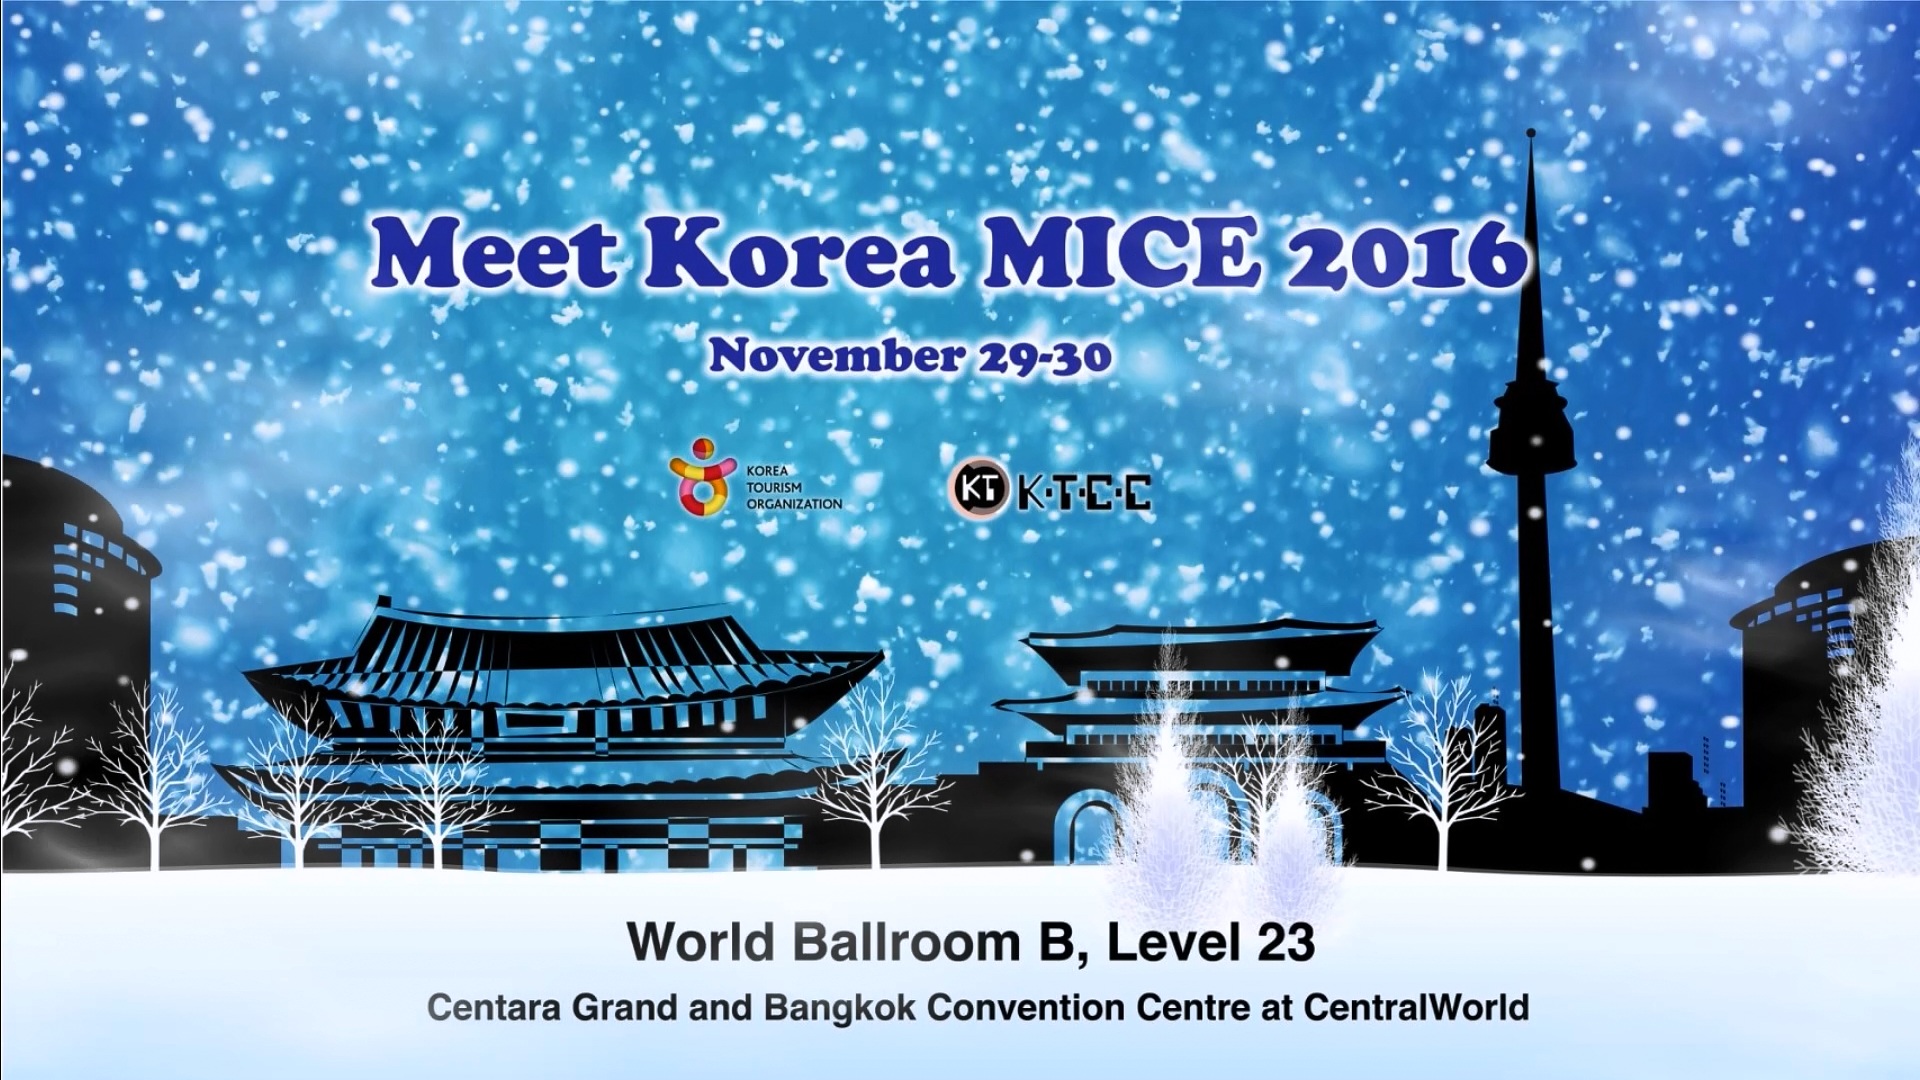 Meet Korea MICE 2016 ประชุมสัมมนาและการท่องเที่ยว